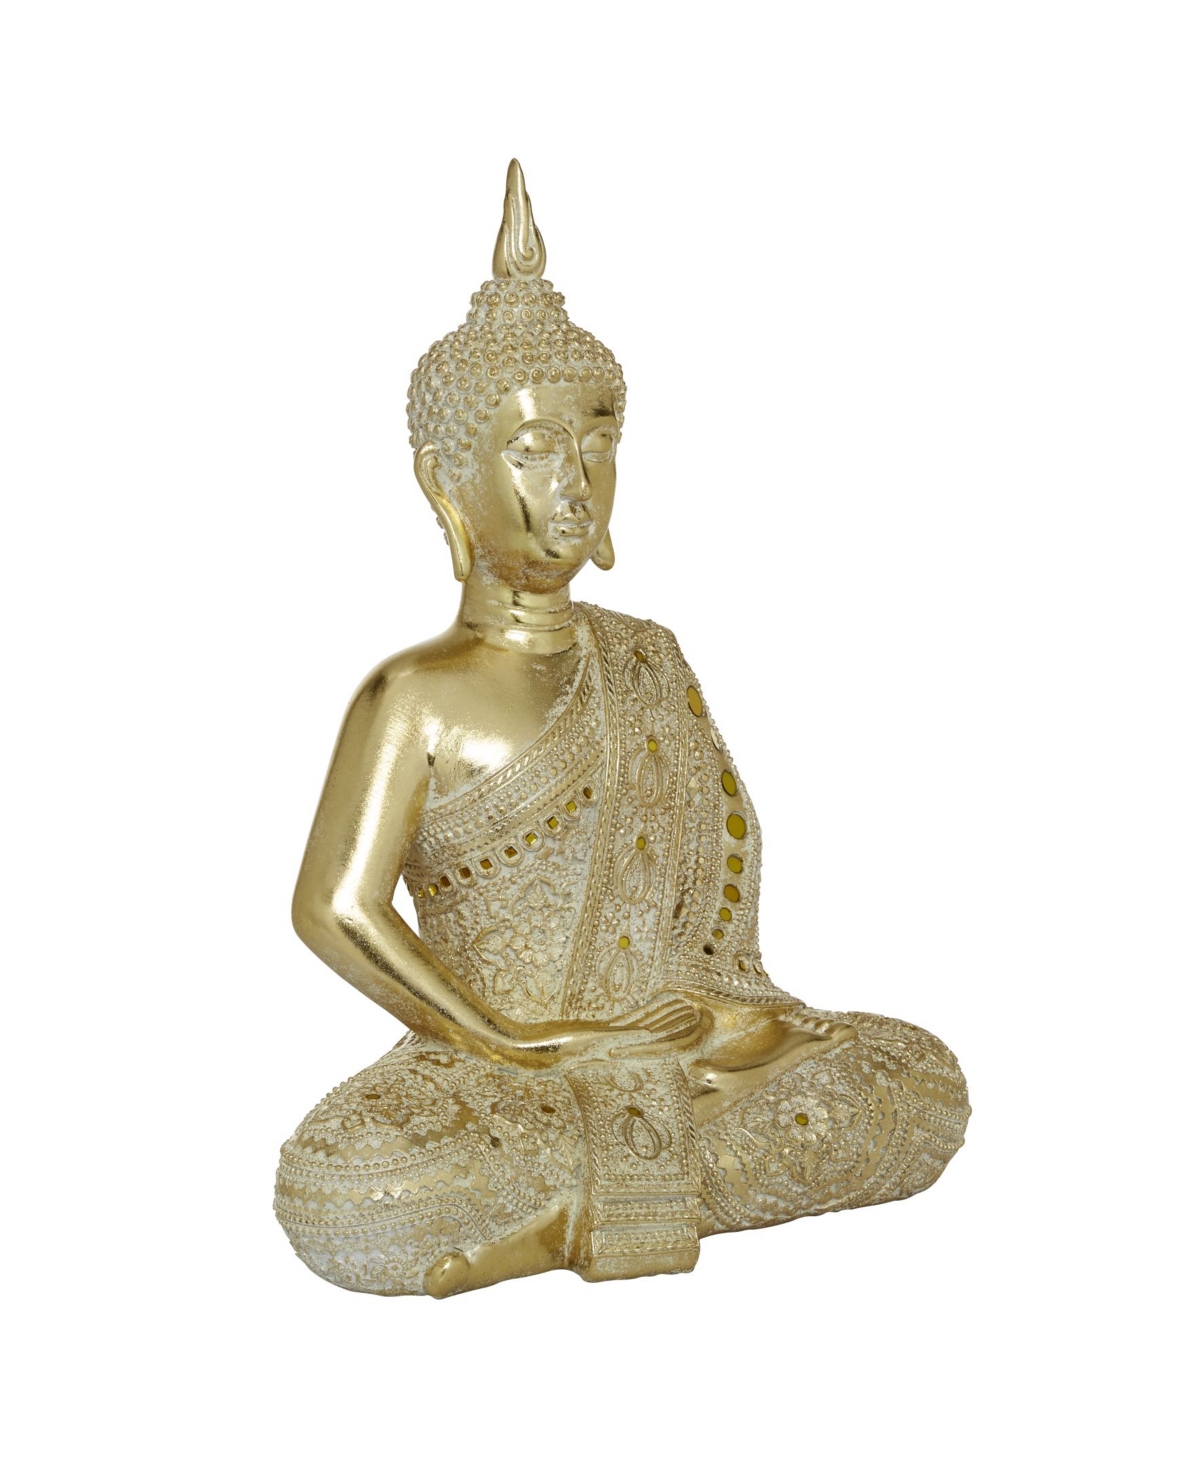 Rosemary Lane Glam Buddha Sculpture, 20" X 14" In Gold-tone